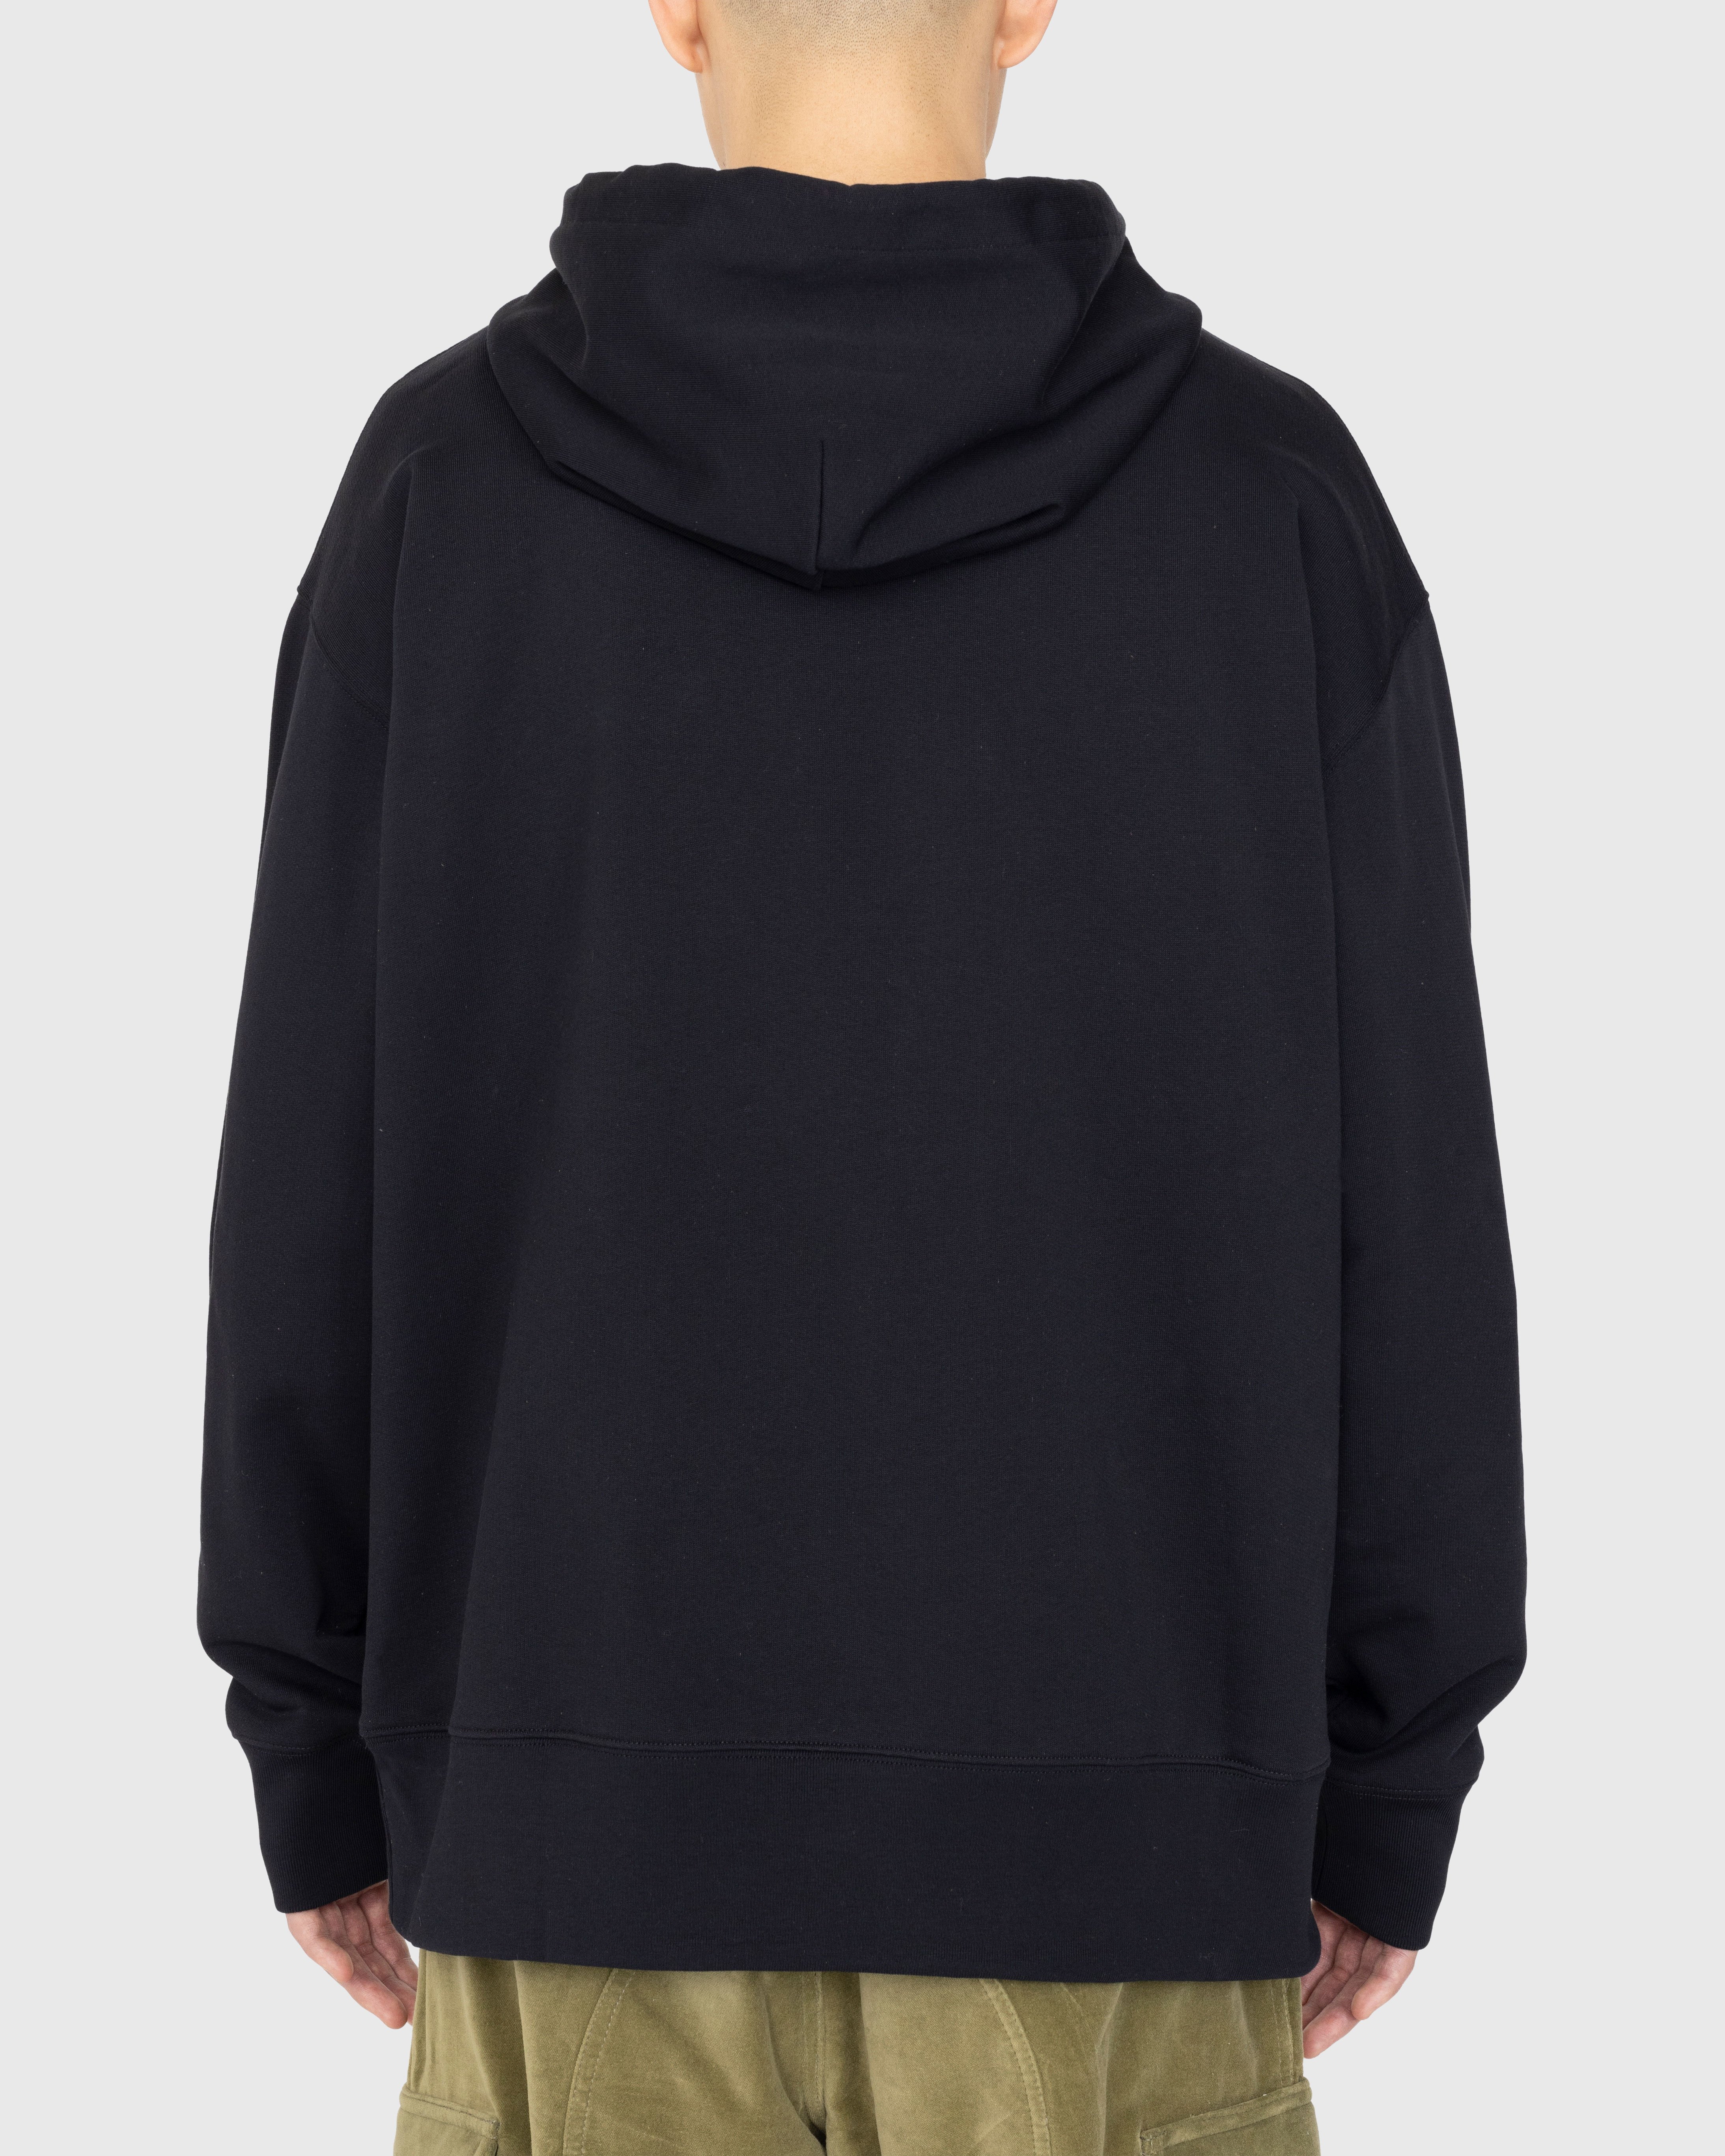 Acne Studios - Organic Cotton Hooded Sweatshirt Black - Clothing - Black - Image 4